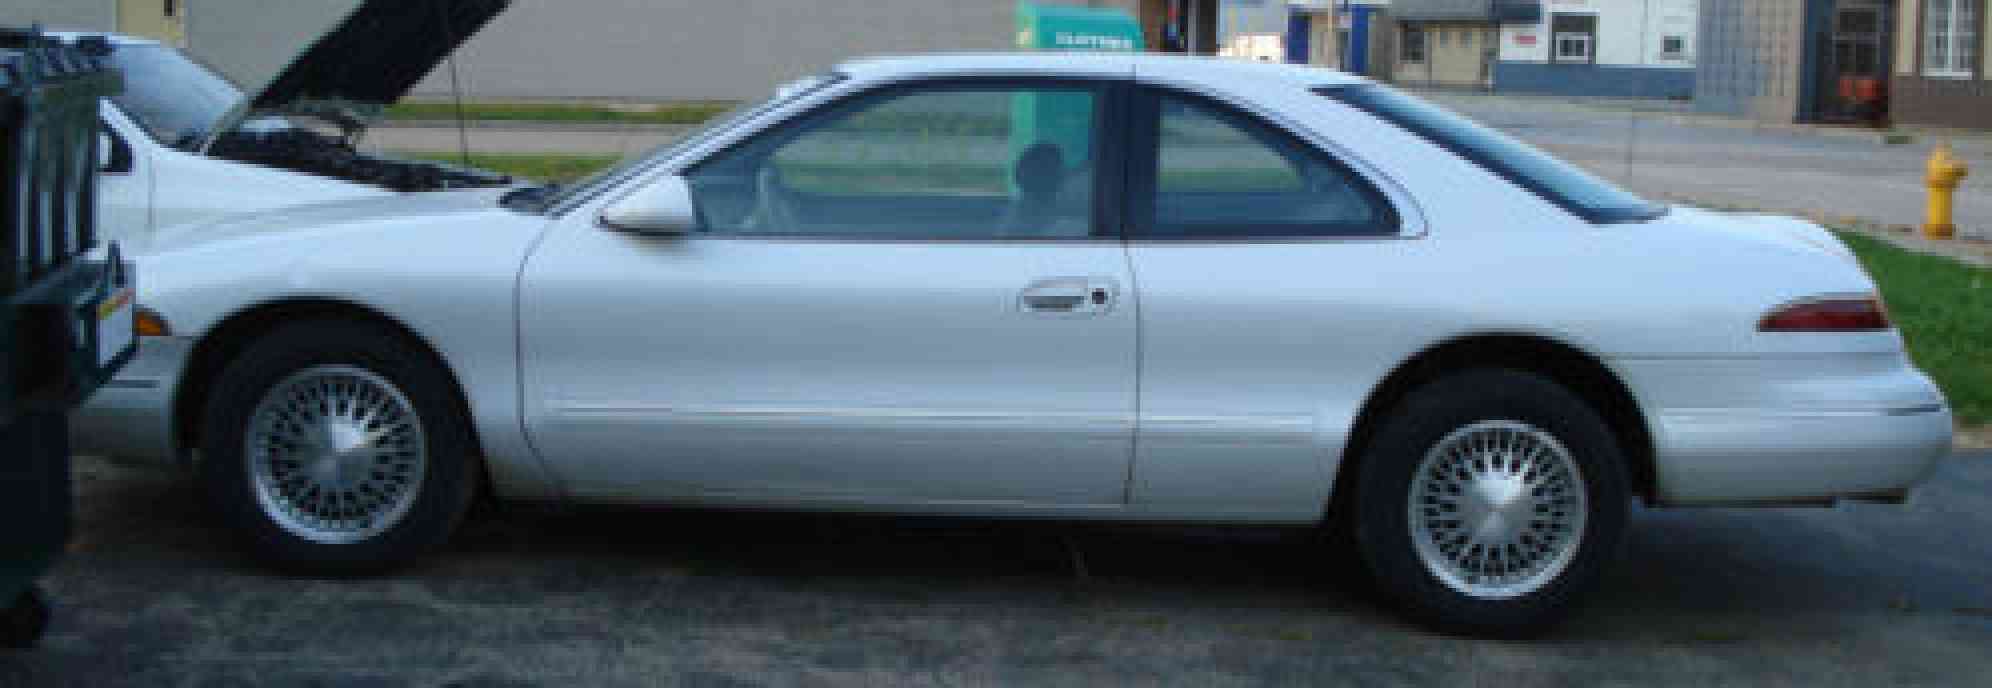 1996 Lincoln Mark Series